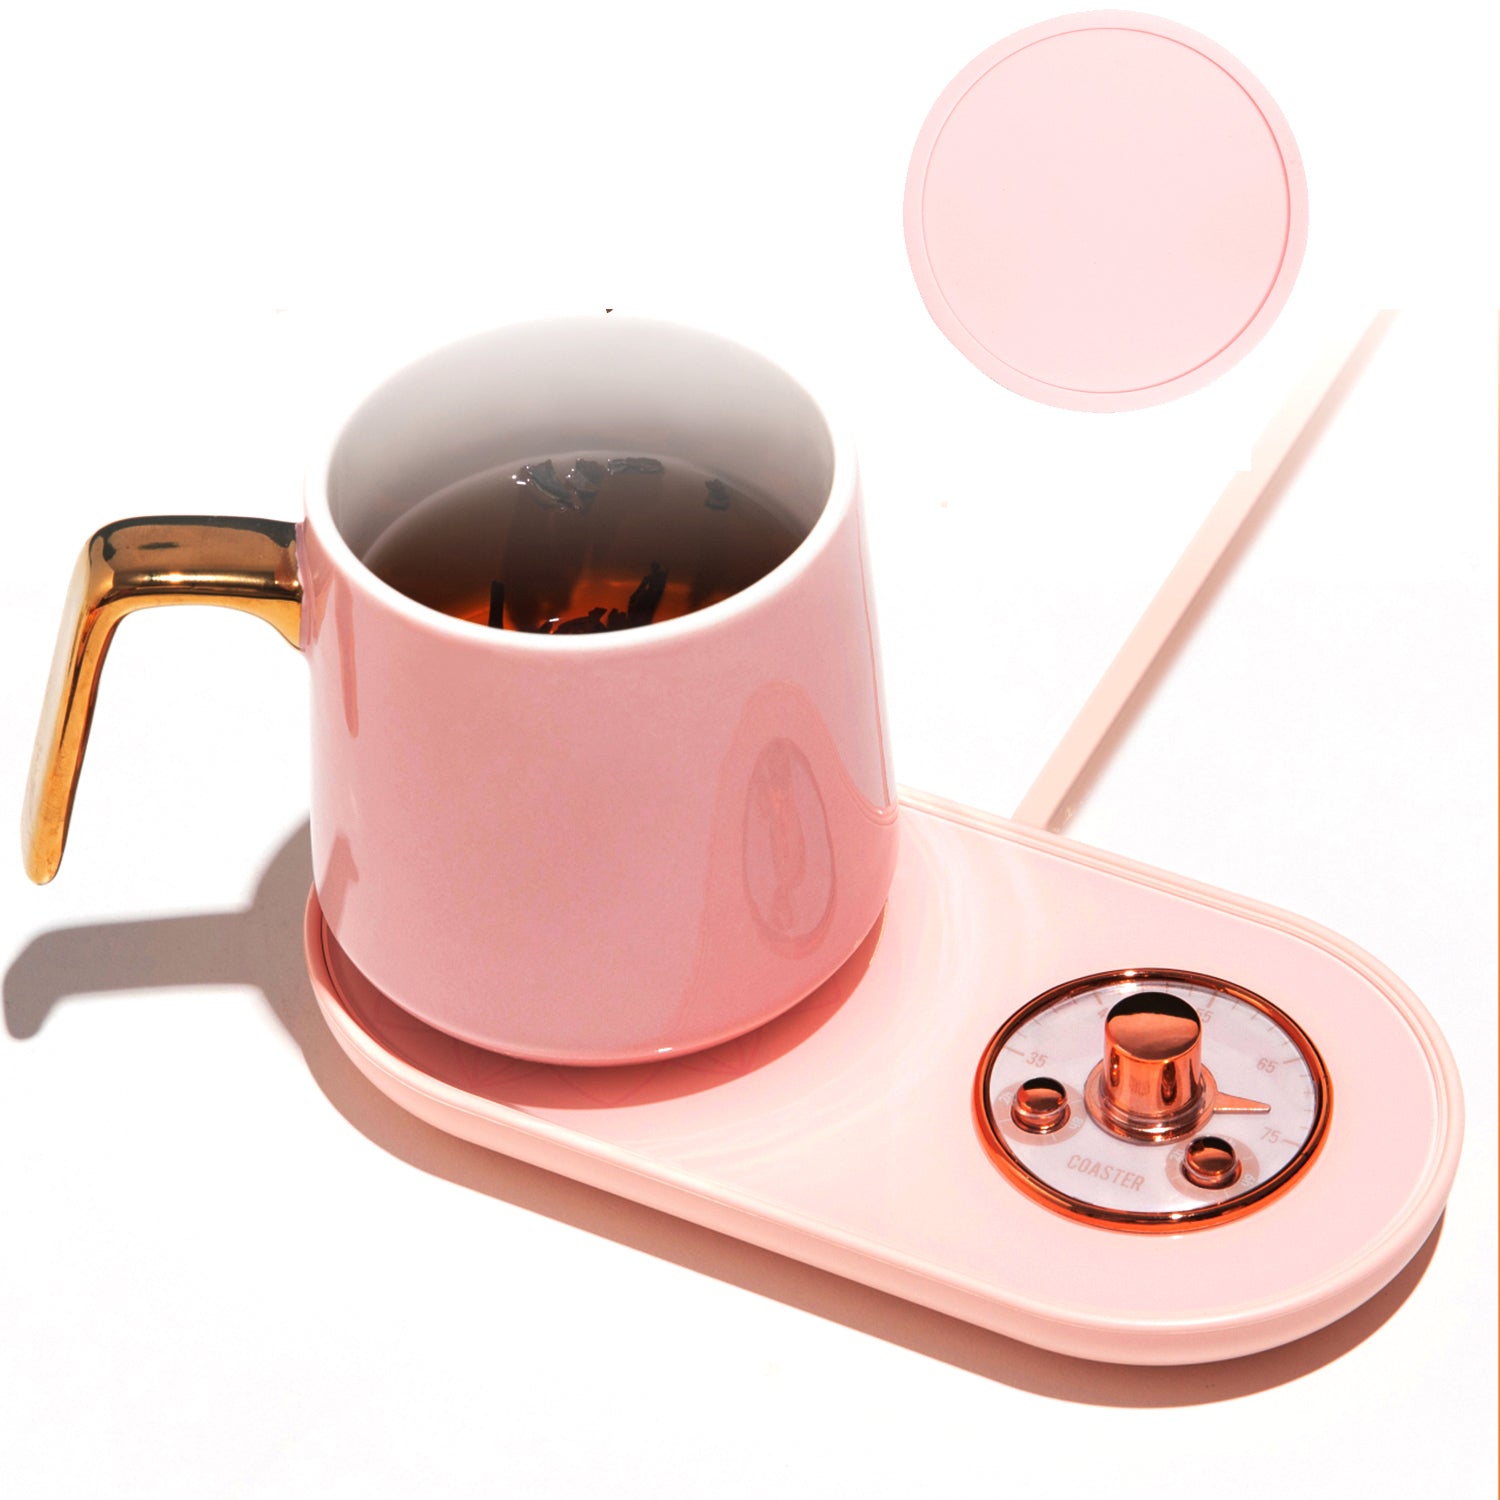 Coffee Mug Warmer for Desk: YISH Flat Bottom Mug Warmers, 25W Electric Tea and Espresso Beverage Warmers for Home and Office, Cup Warmer Auto Shut